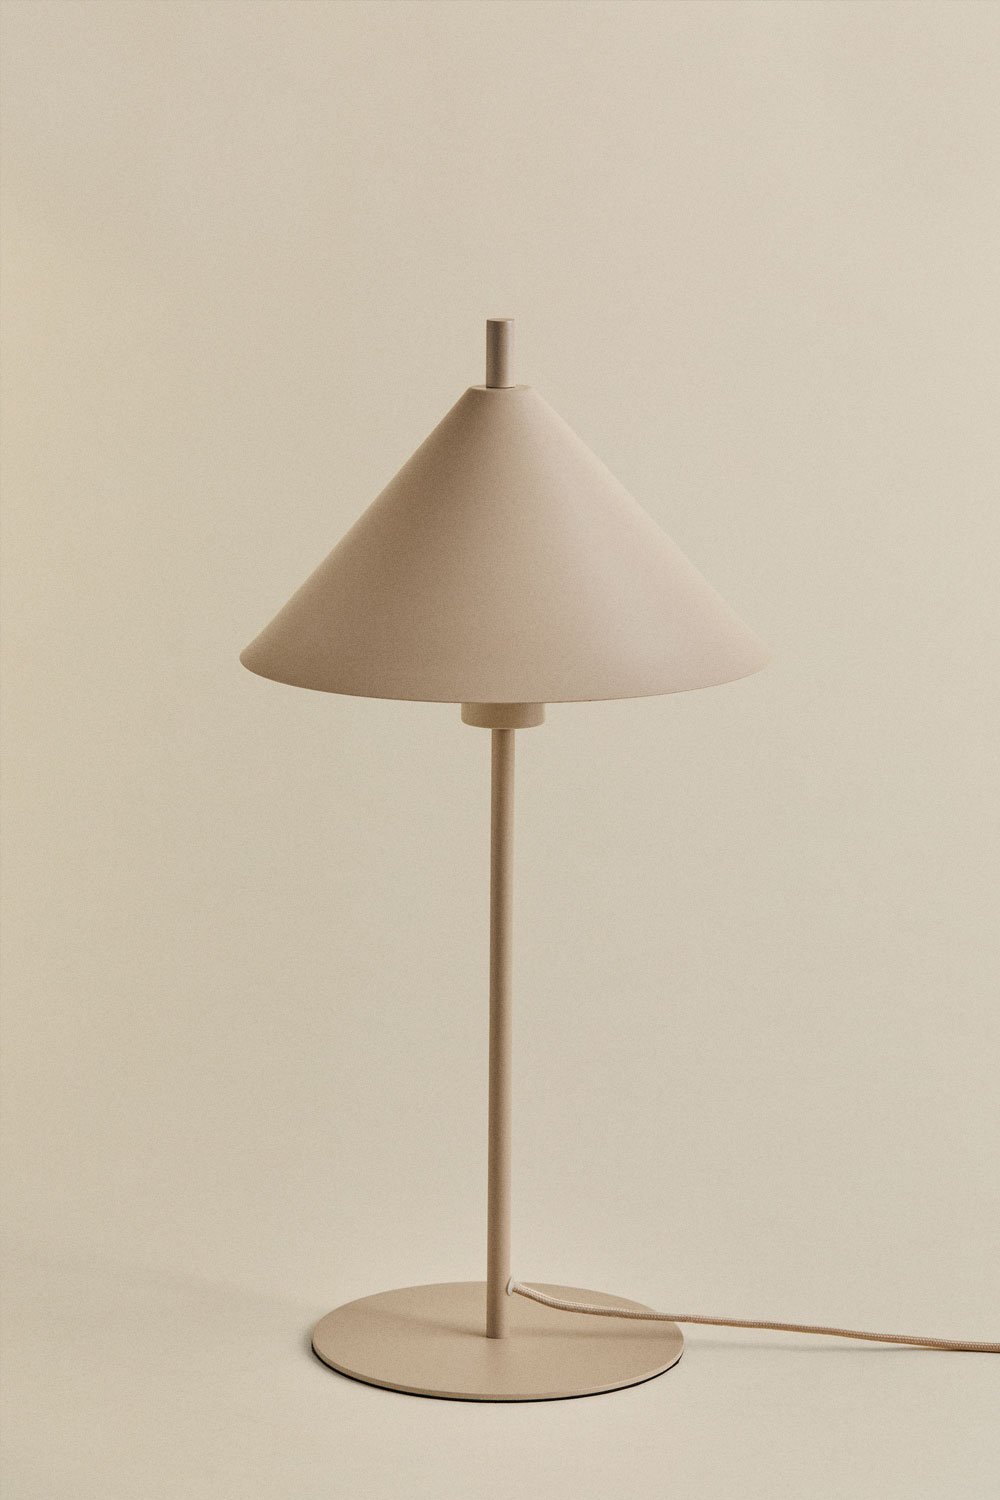 Hilma Design metalen tafellamp, galerij beeld 1